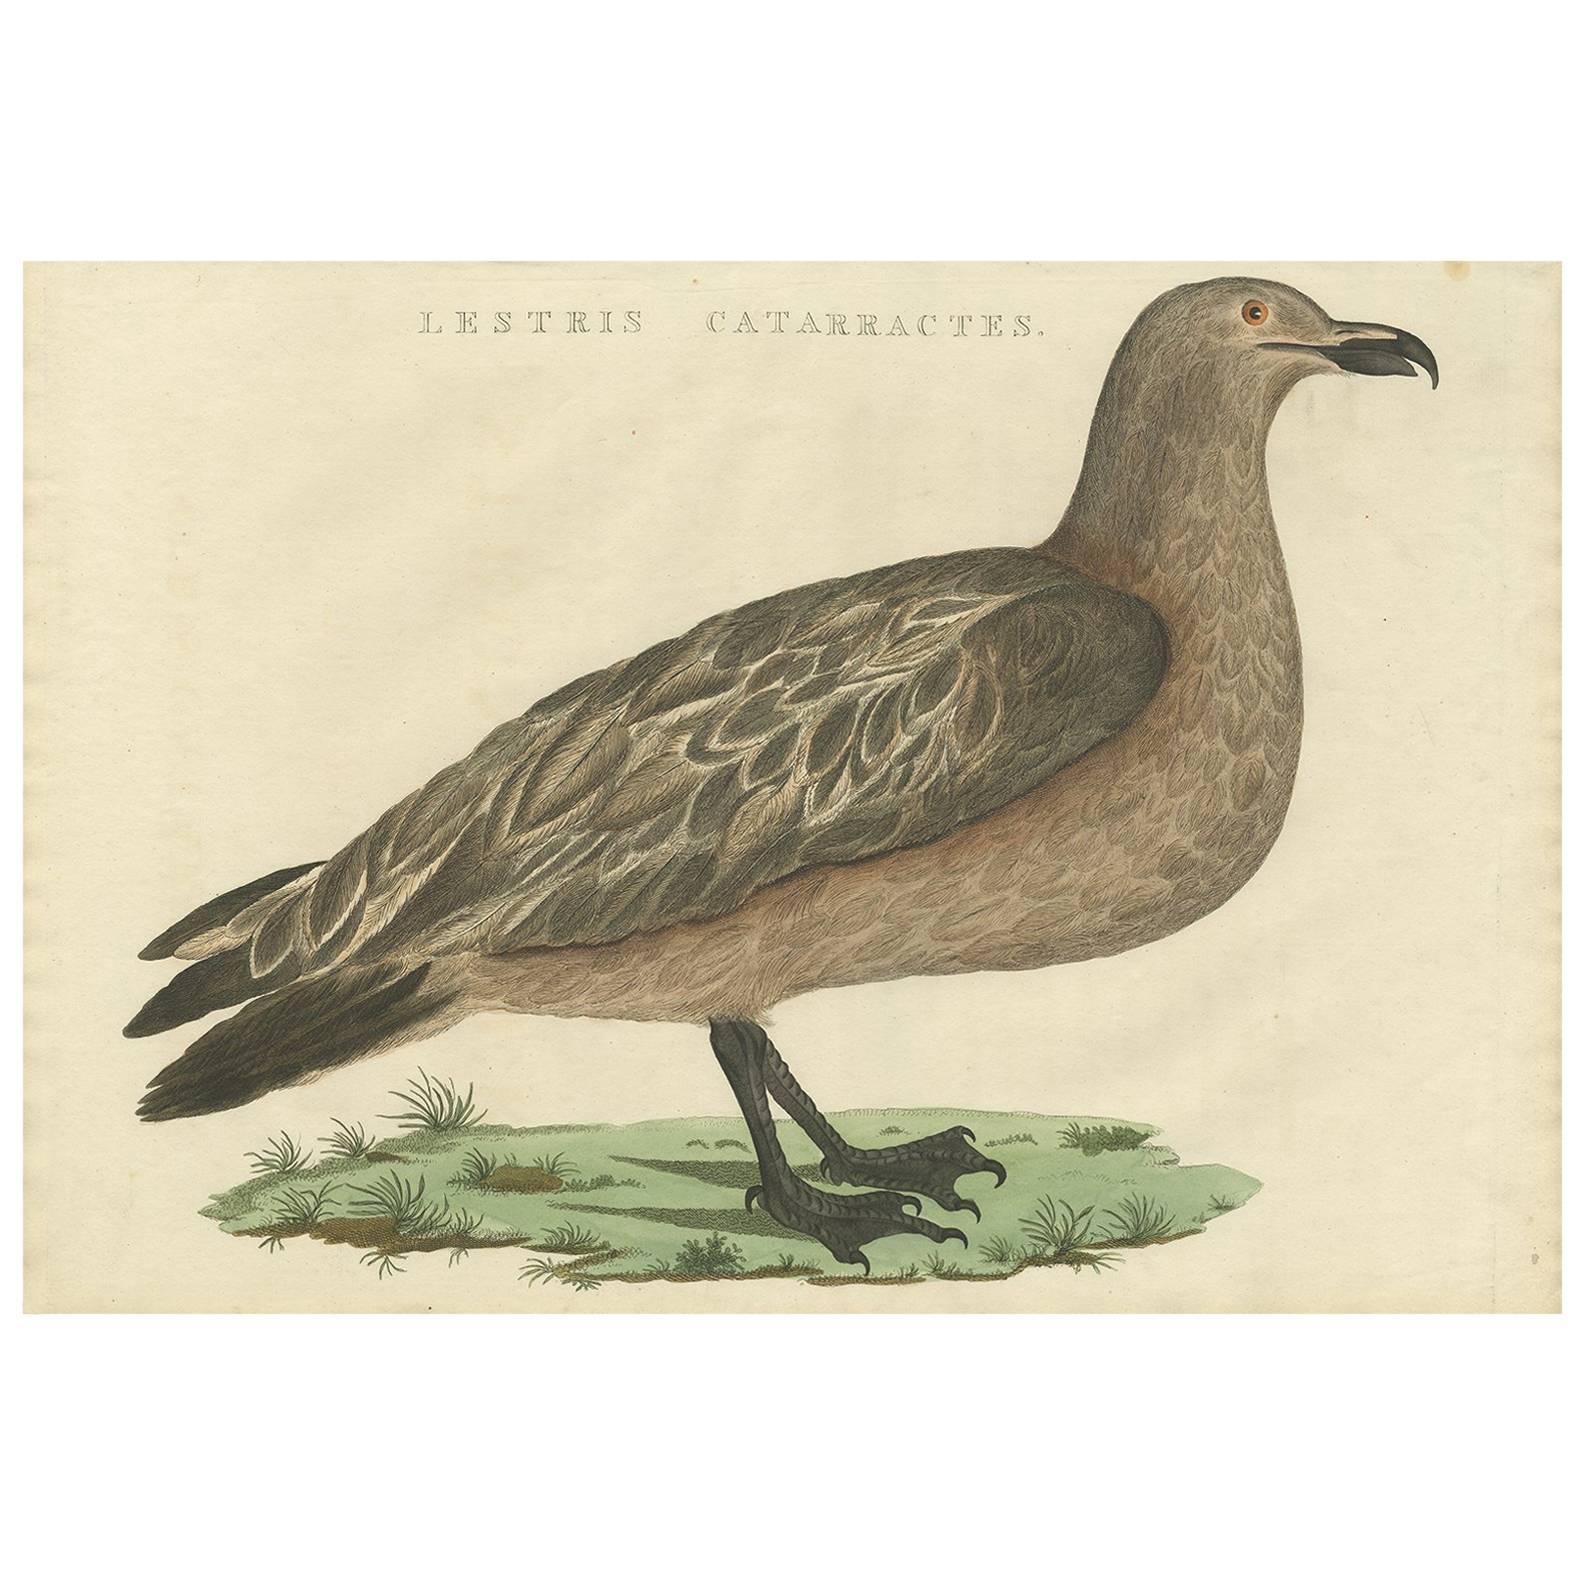 Antique Bird Print of the Great Skua by Sepp & Nozeman, 1829